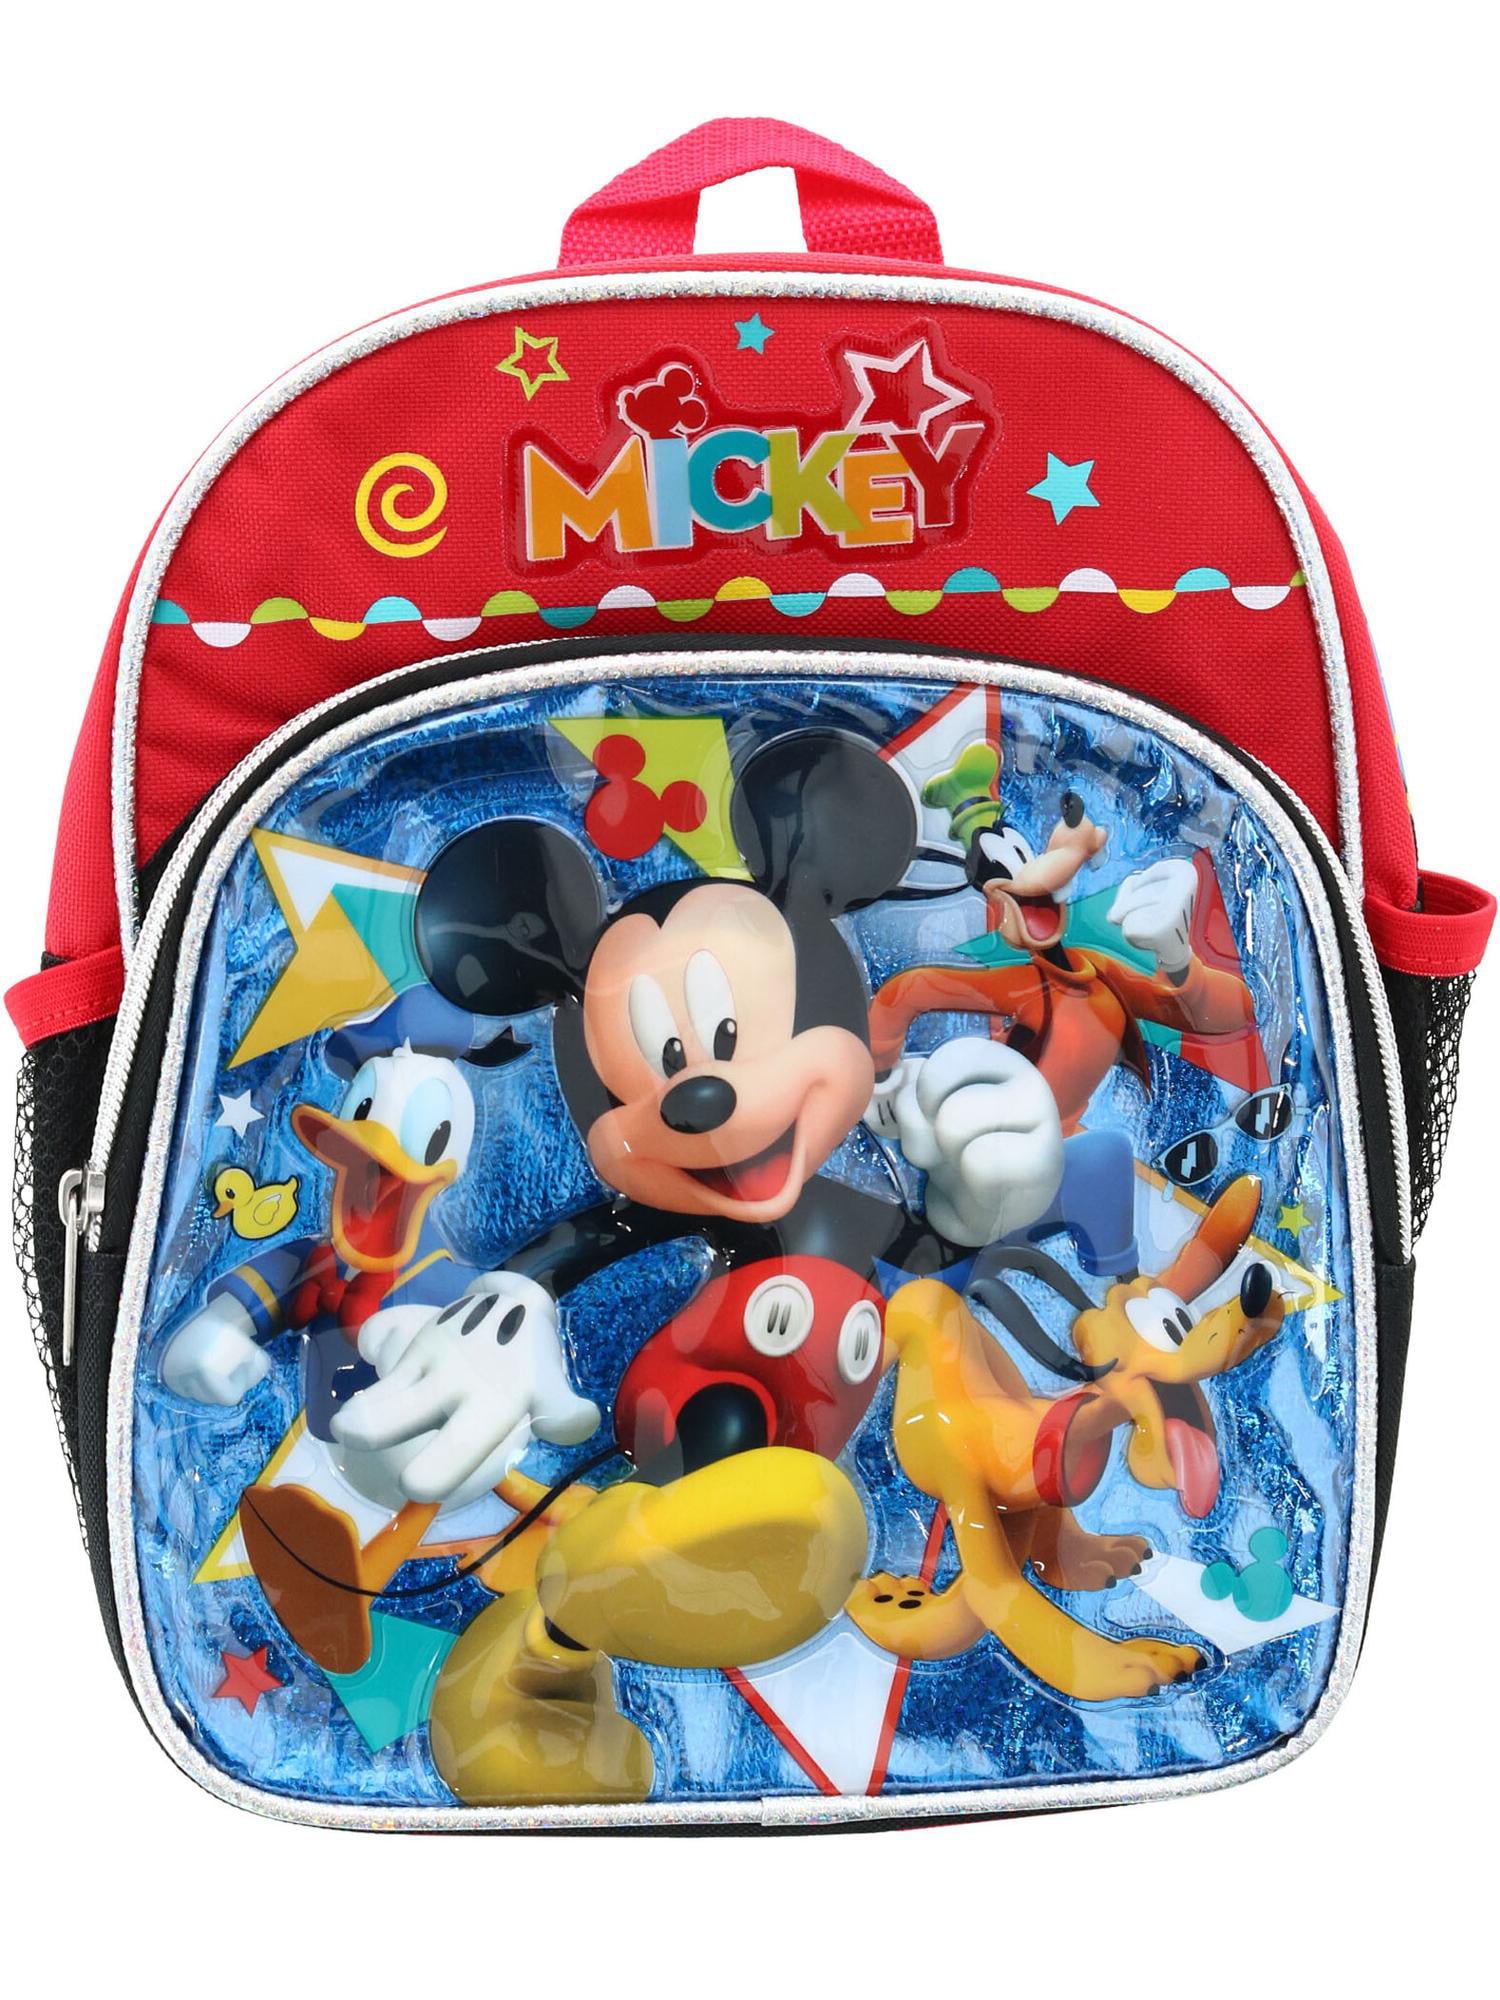 Minnie Mouse Club House Kids Backpack Nursery Bag Cartoons School Boys Girls M 